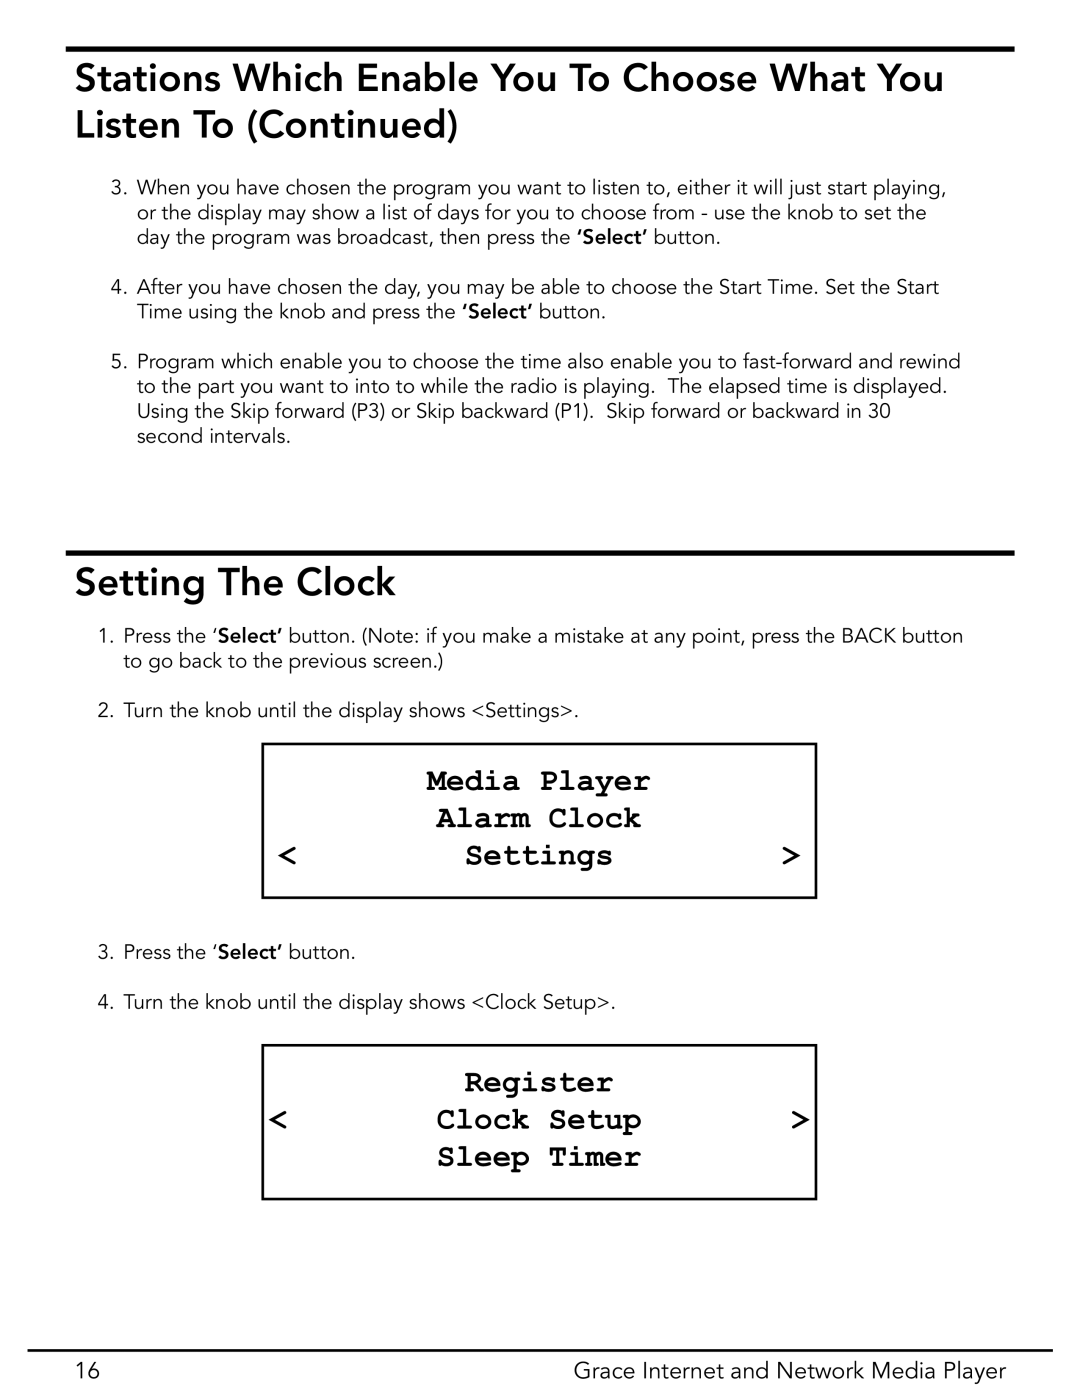 Grace GDI-IR3020 manual Setting The Clock, Media Player Alarm Clock Settings, Register, Setup, Sleep, Timer 